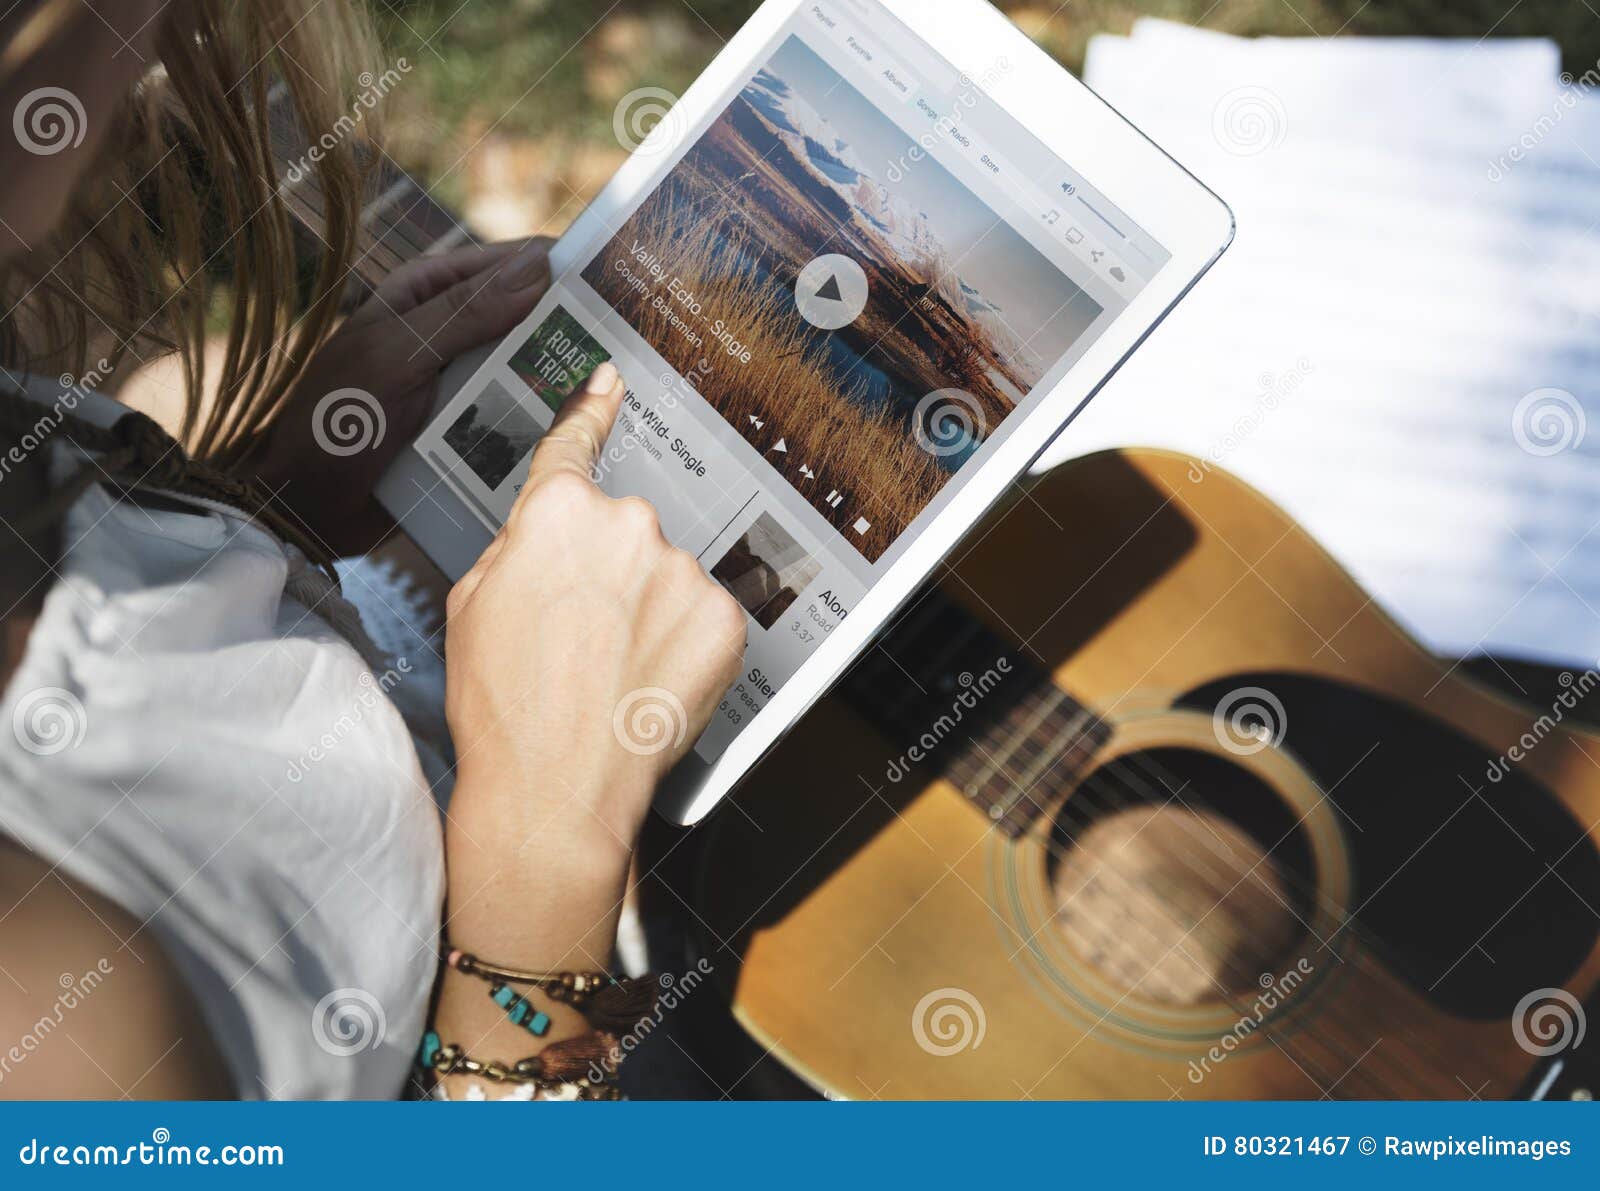 music steaming multimedia listening digital tablet technology co